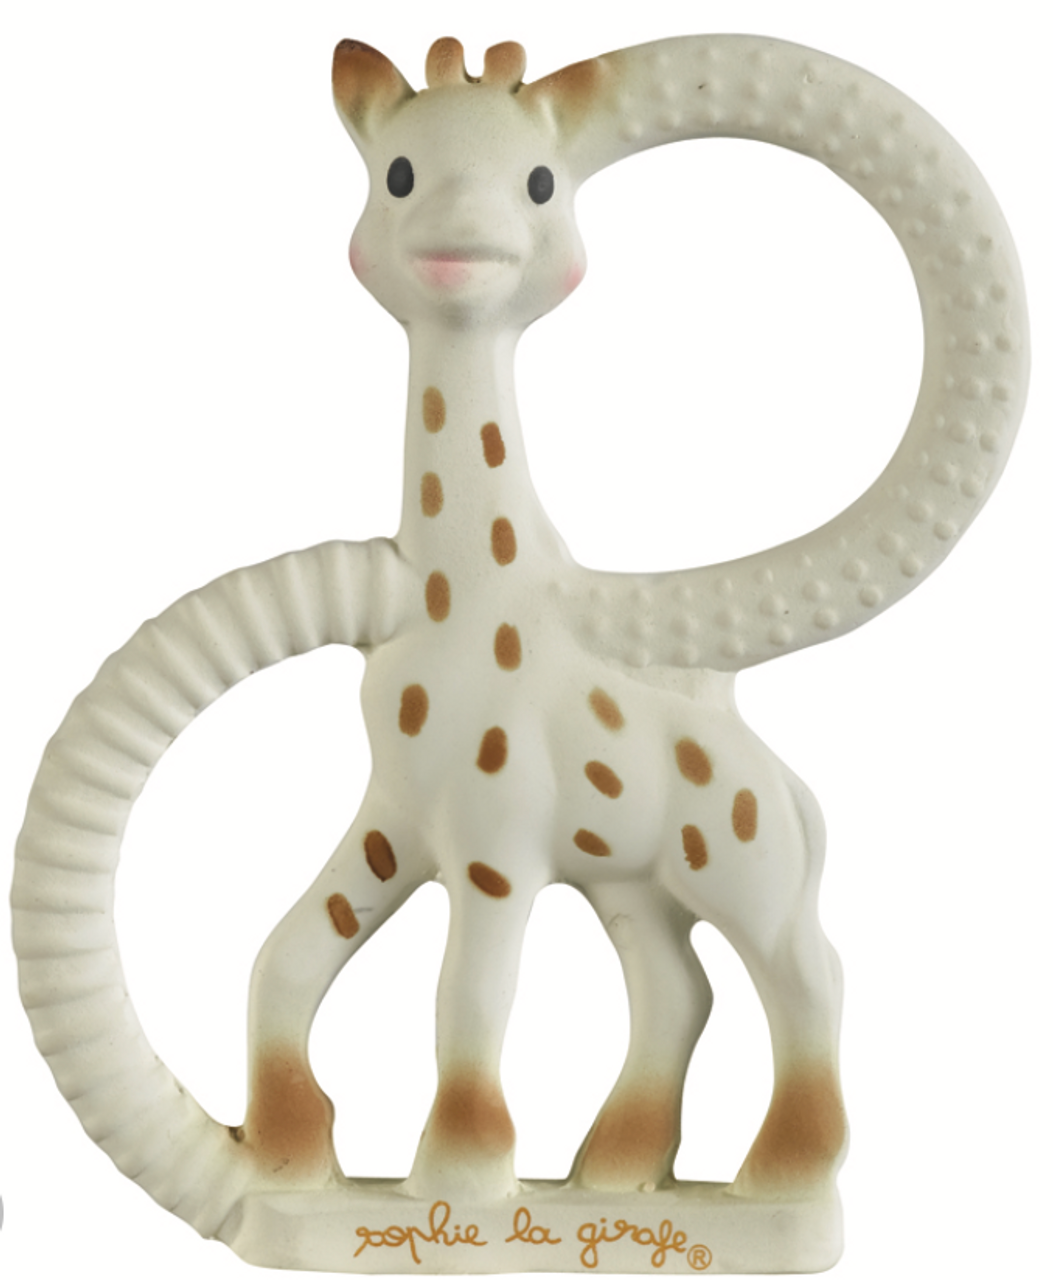 Buy Sophie La Girafe Sophie La Girafe The Teether Set from the